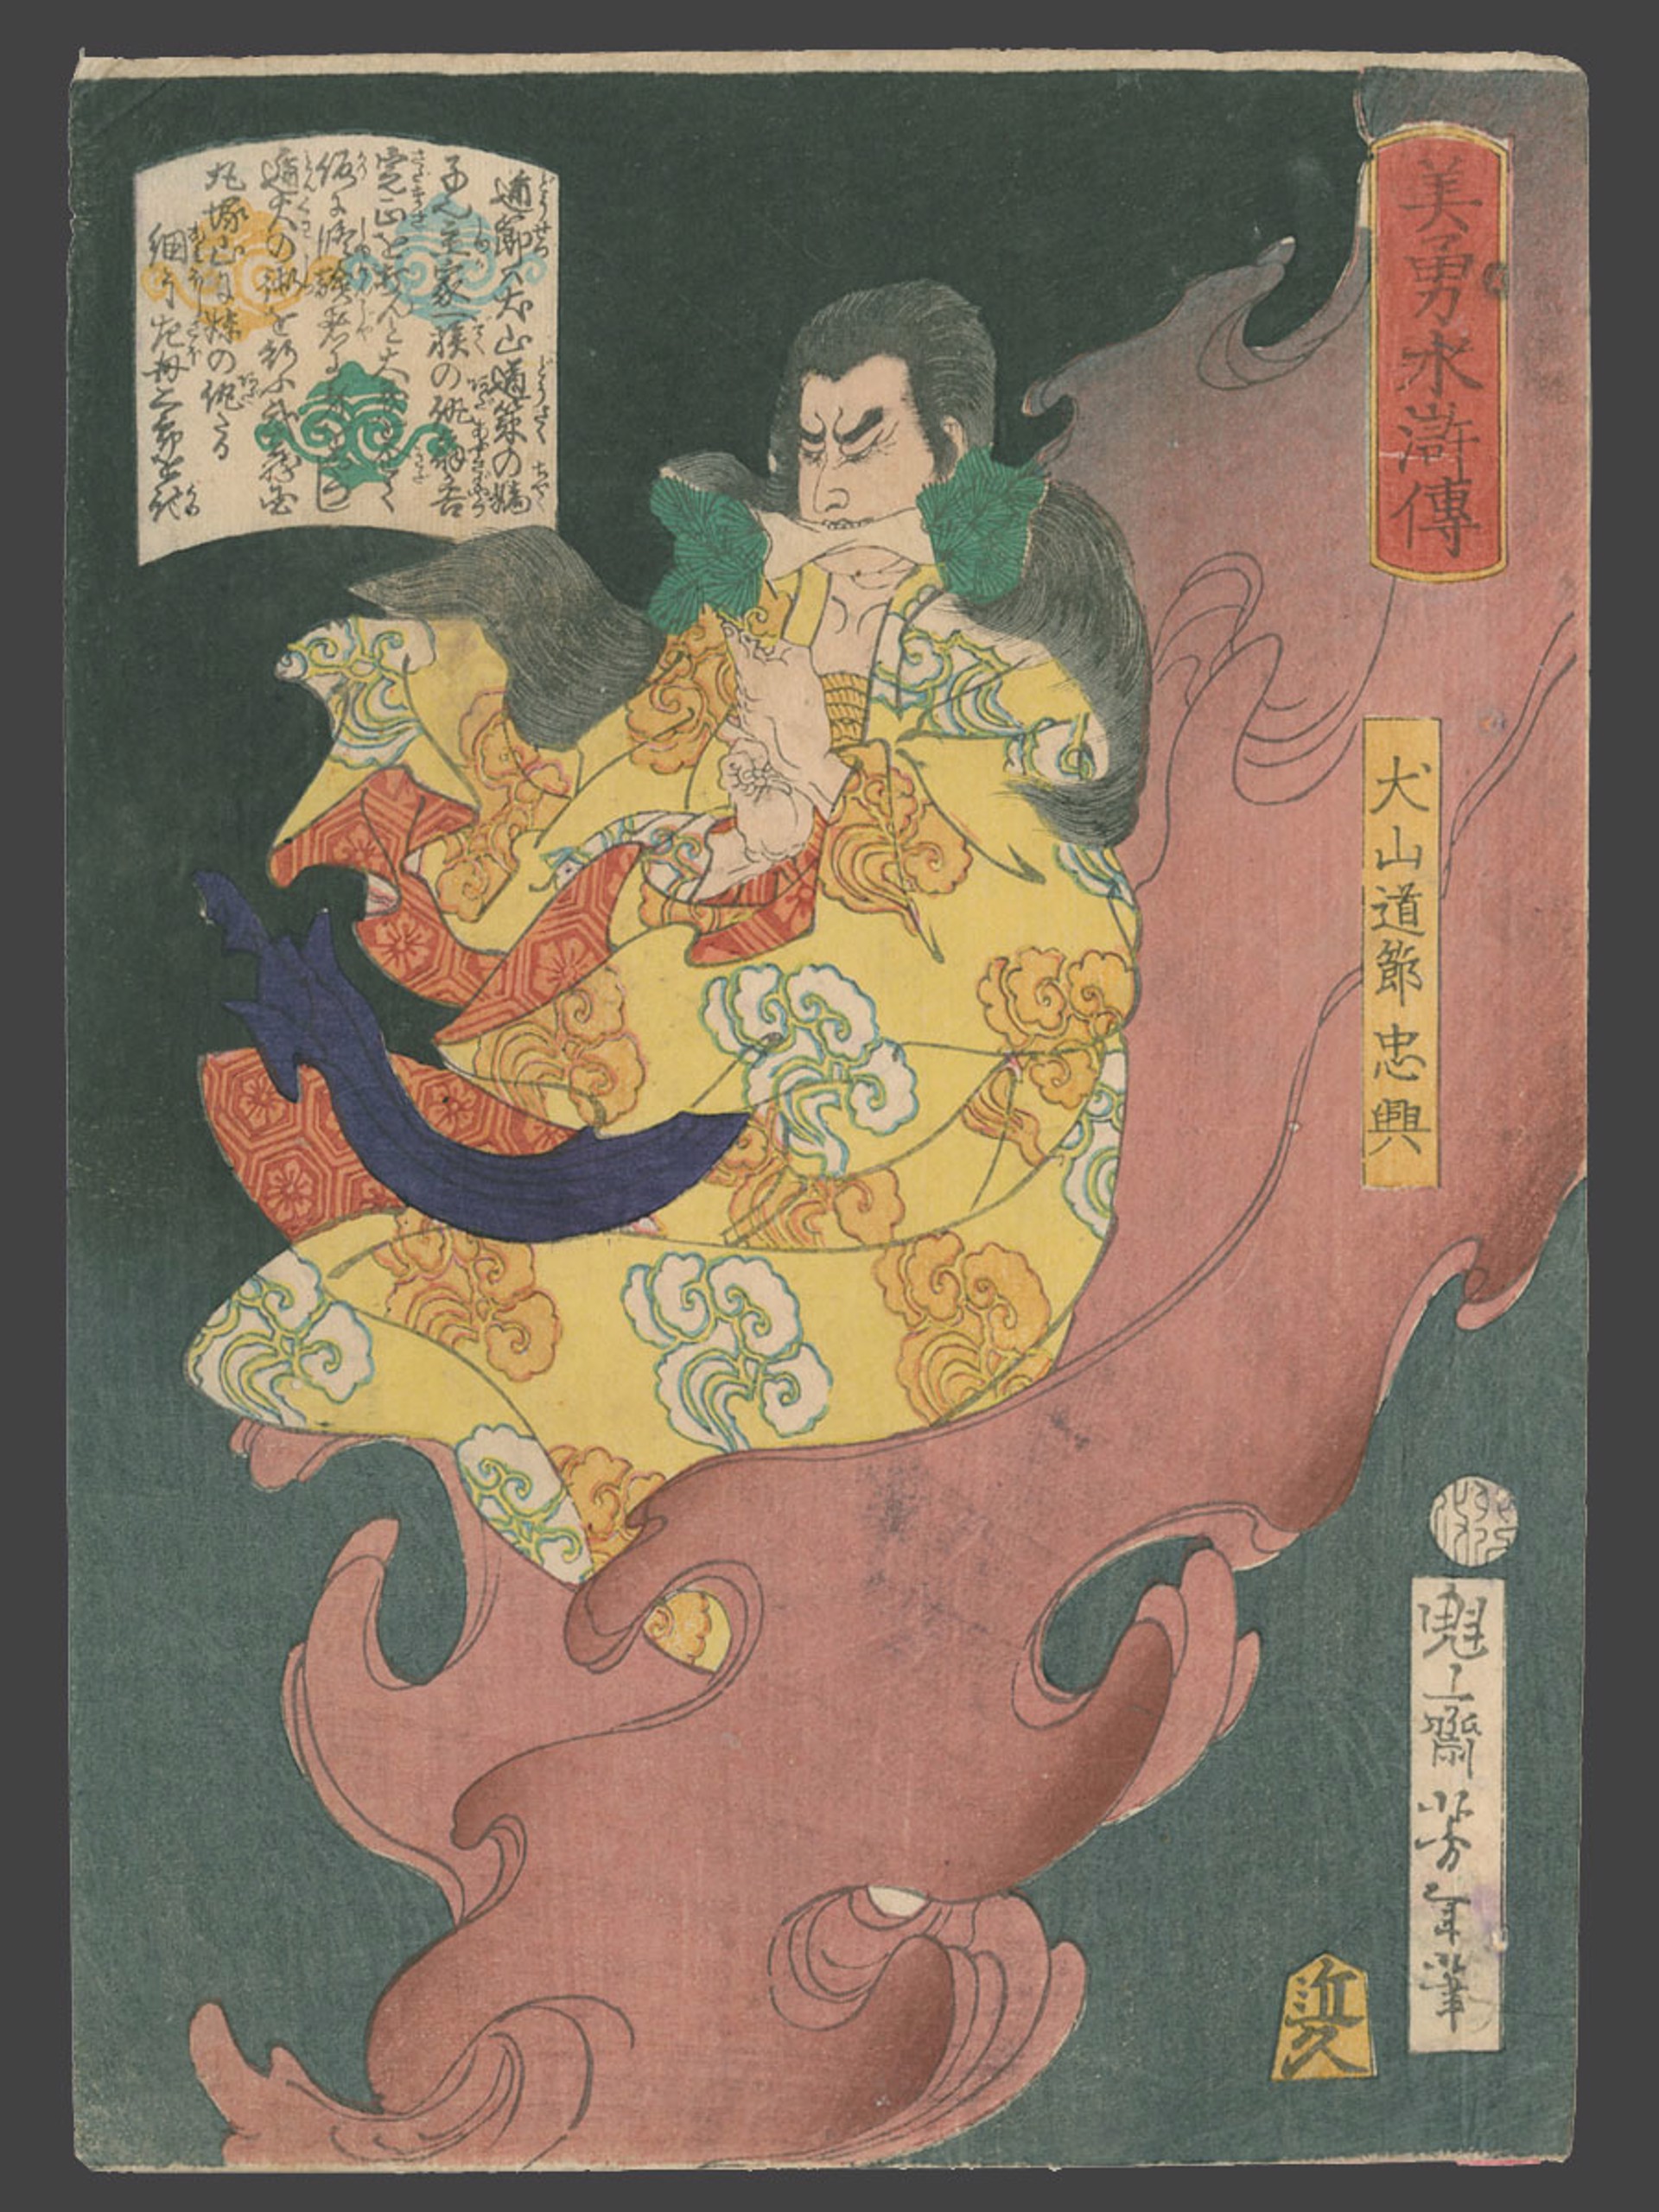 Inuyama Dosetsu Tadatomo Biyu Suikoden (Beauty and Valor in Tales of the Water Margin) by Yoshitoshi